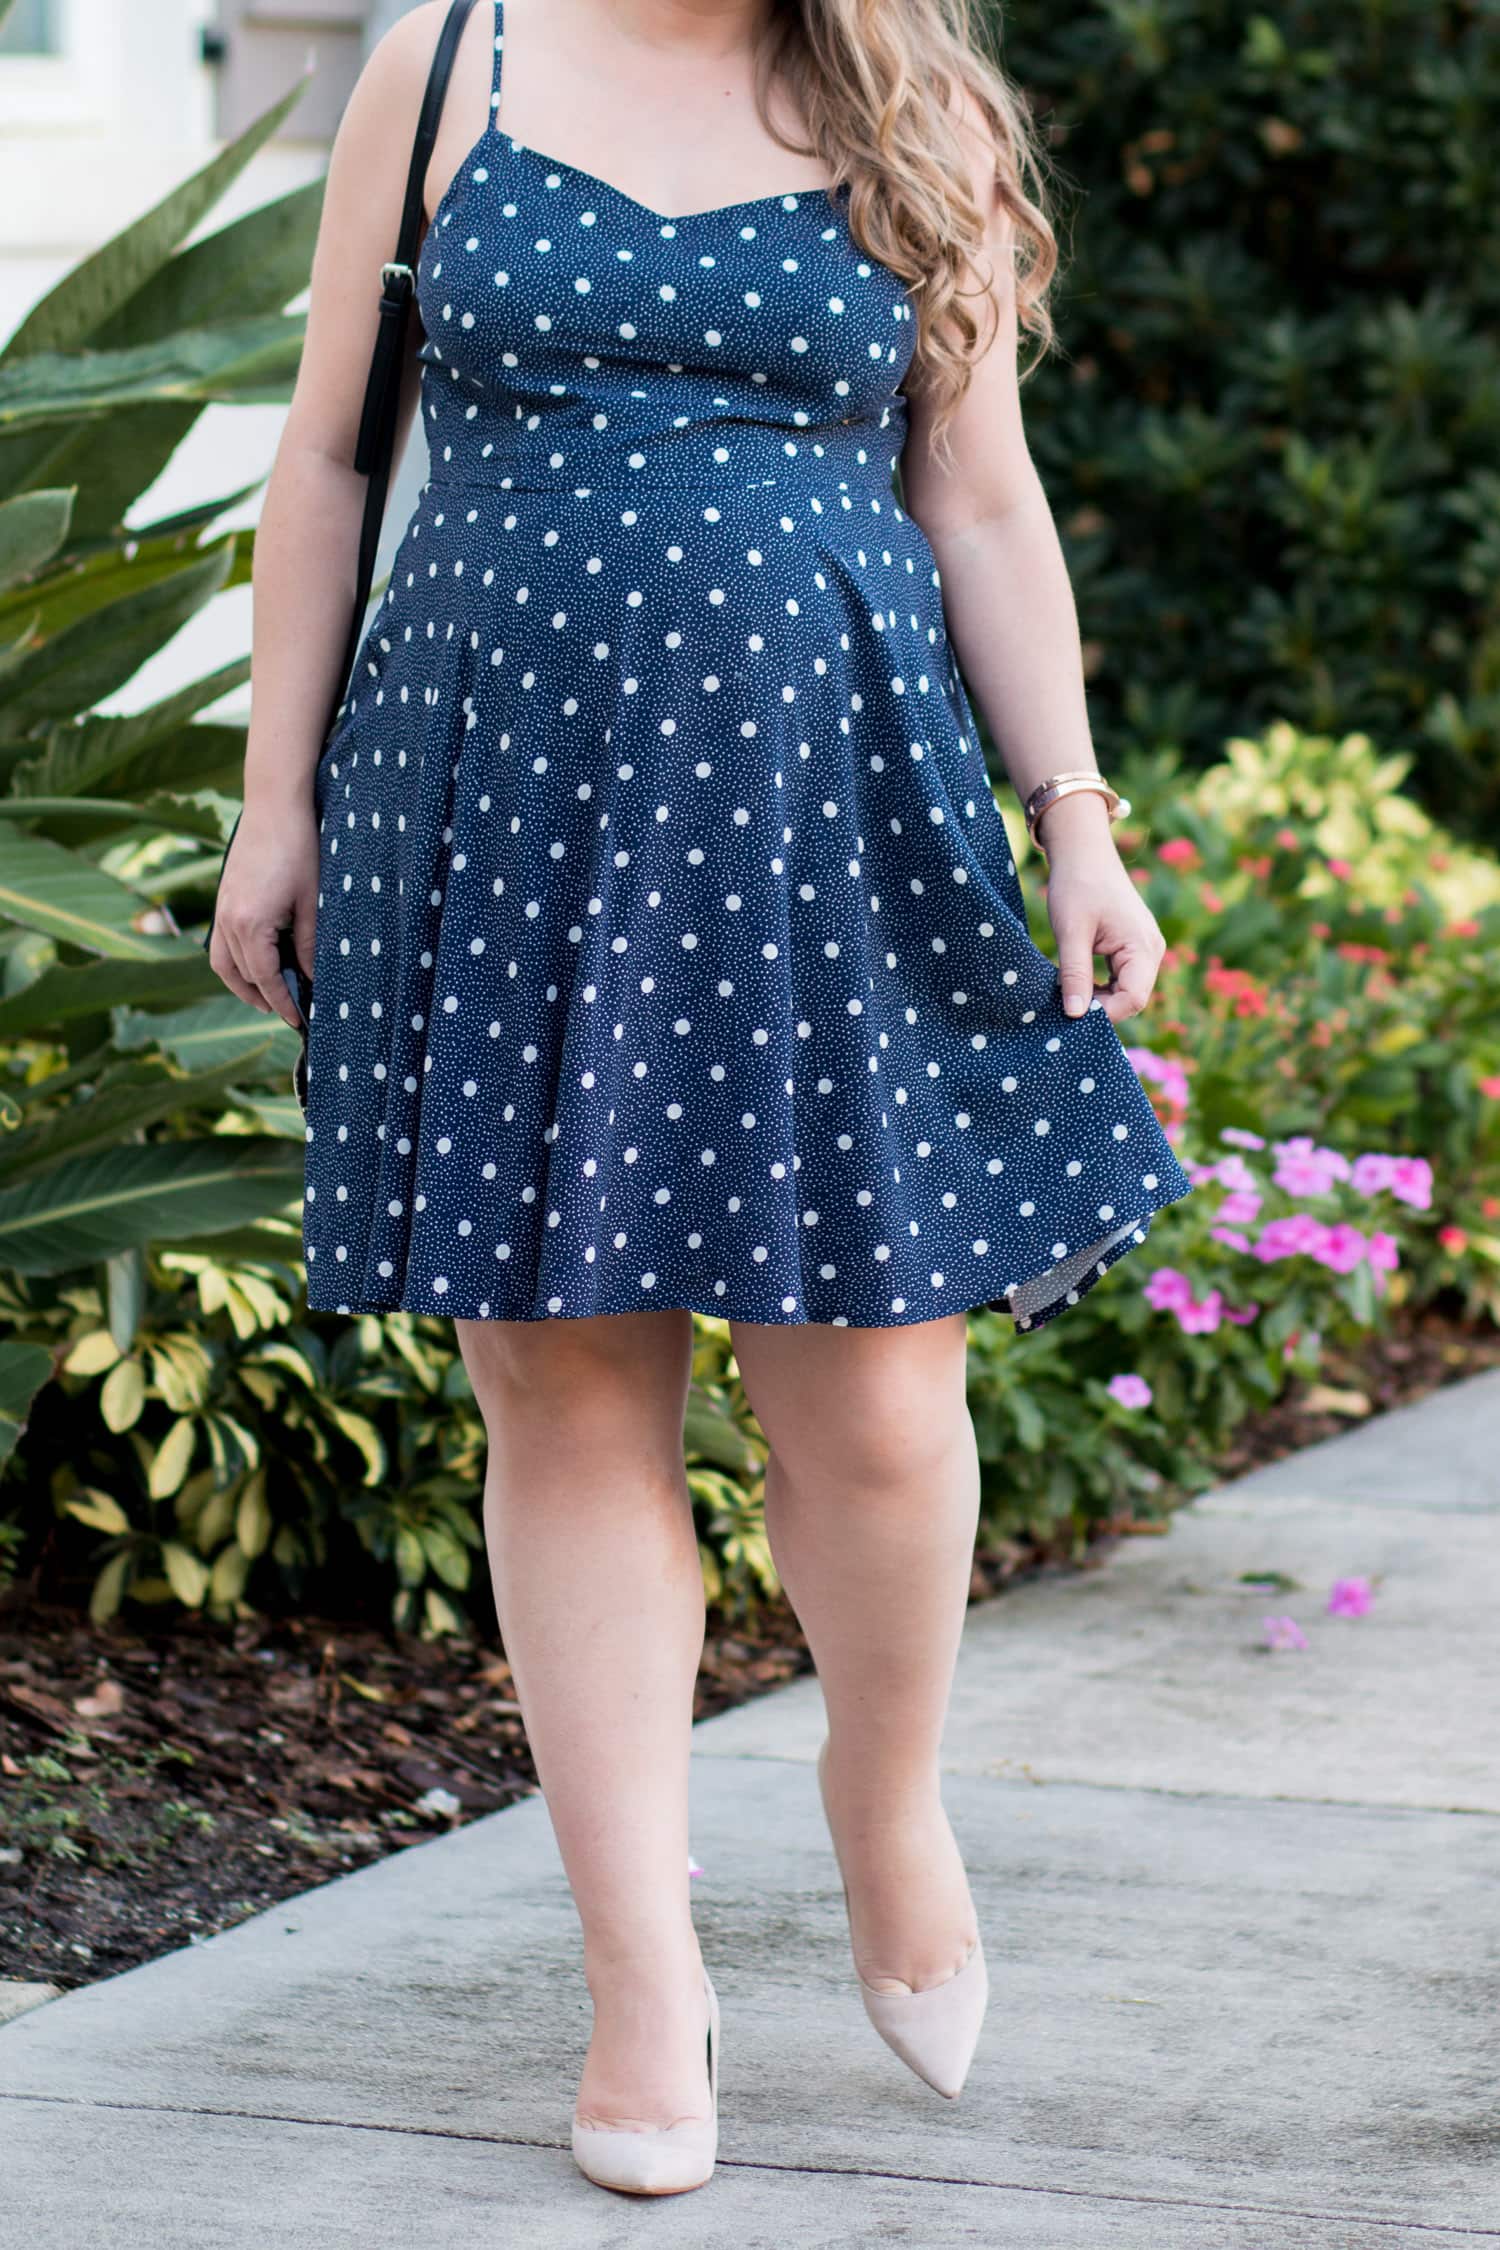 maternity style polka dot sun dress nude heels zappos shoes | Ashley Brooke Nicholas Florida style blogger